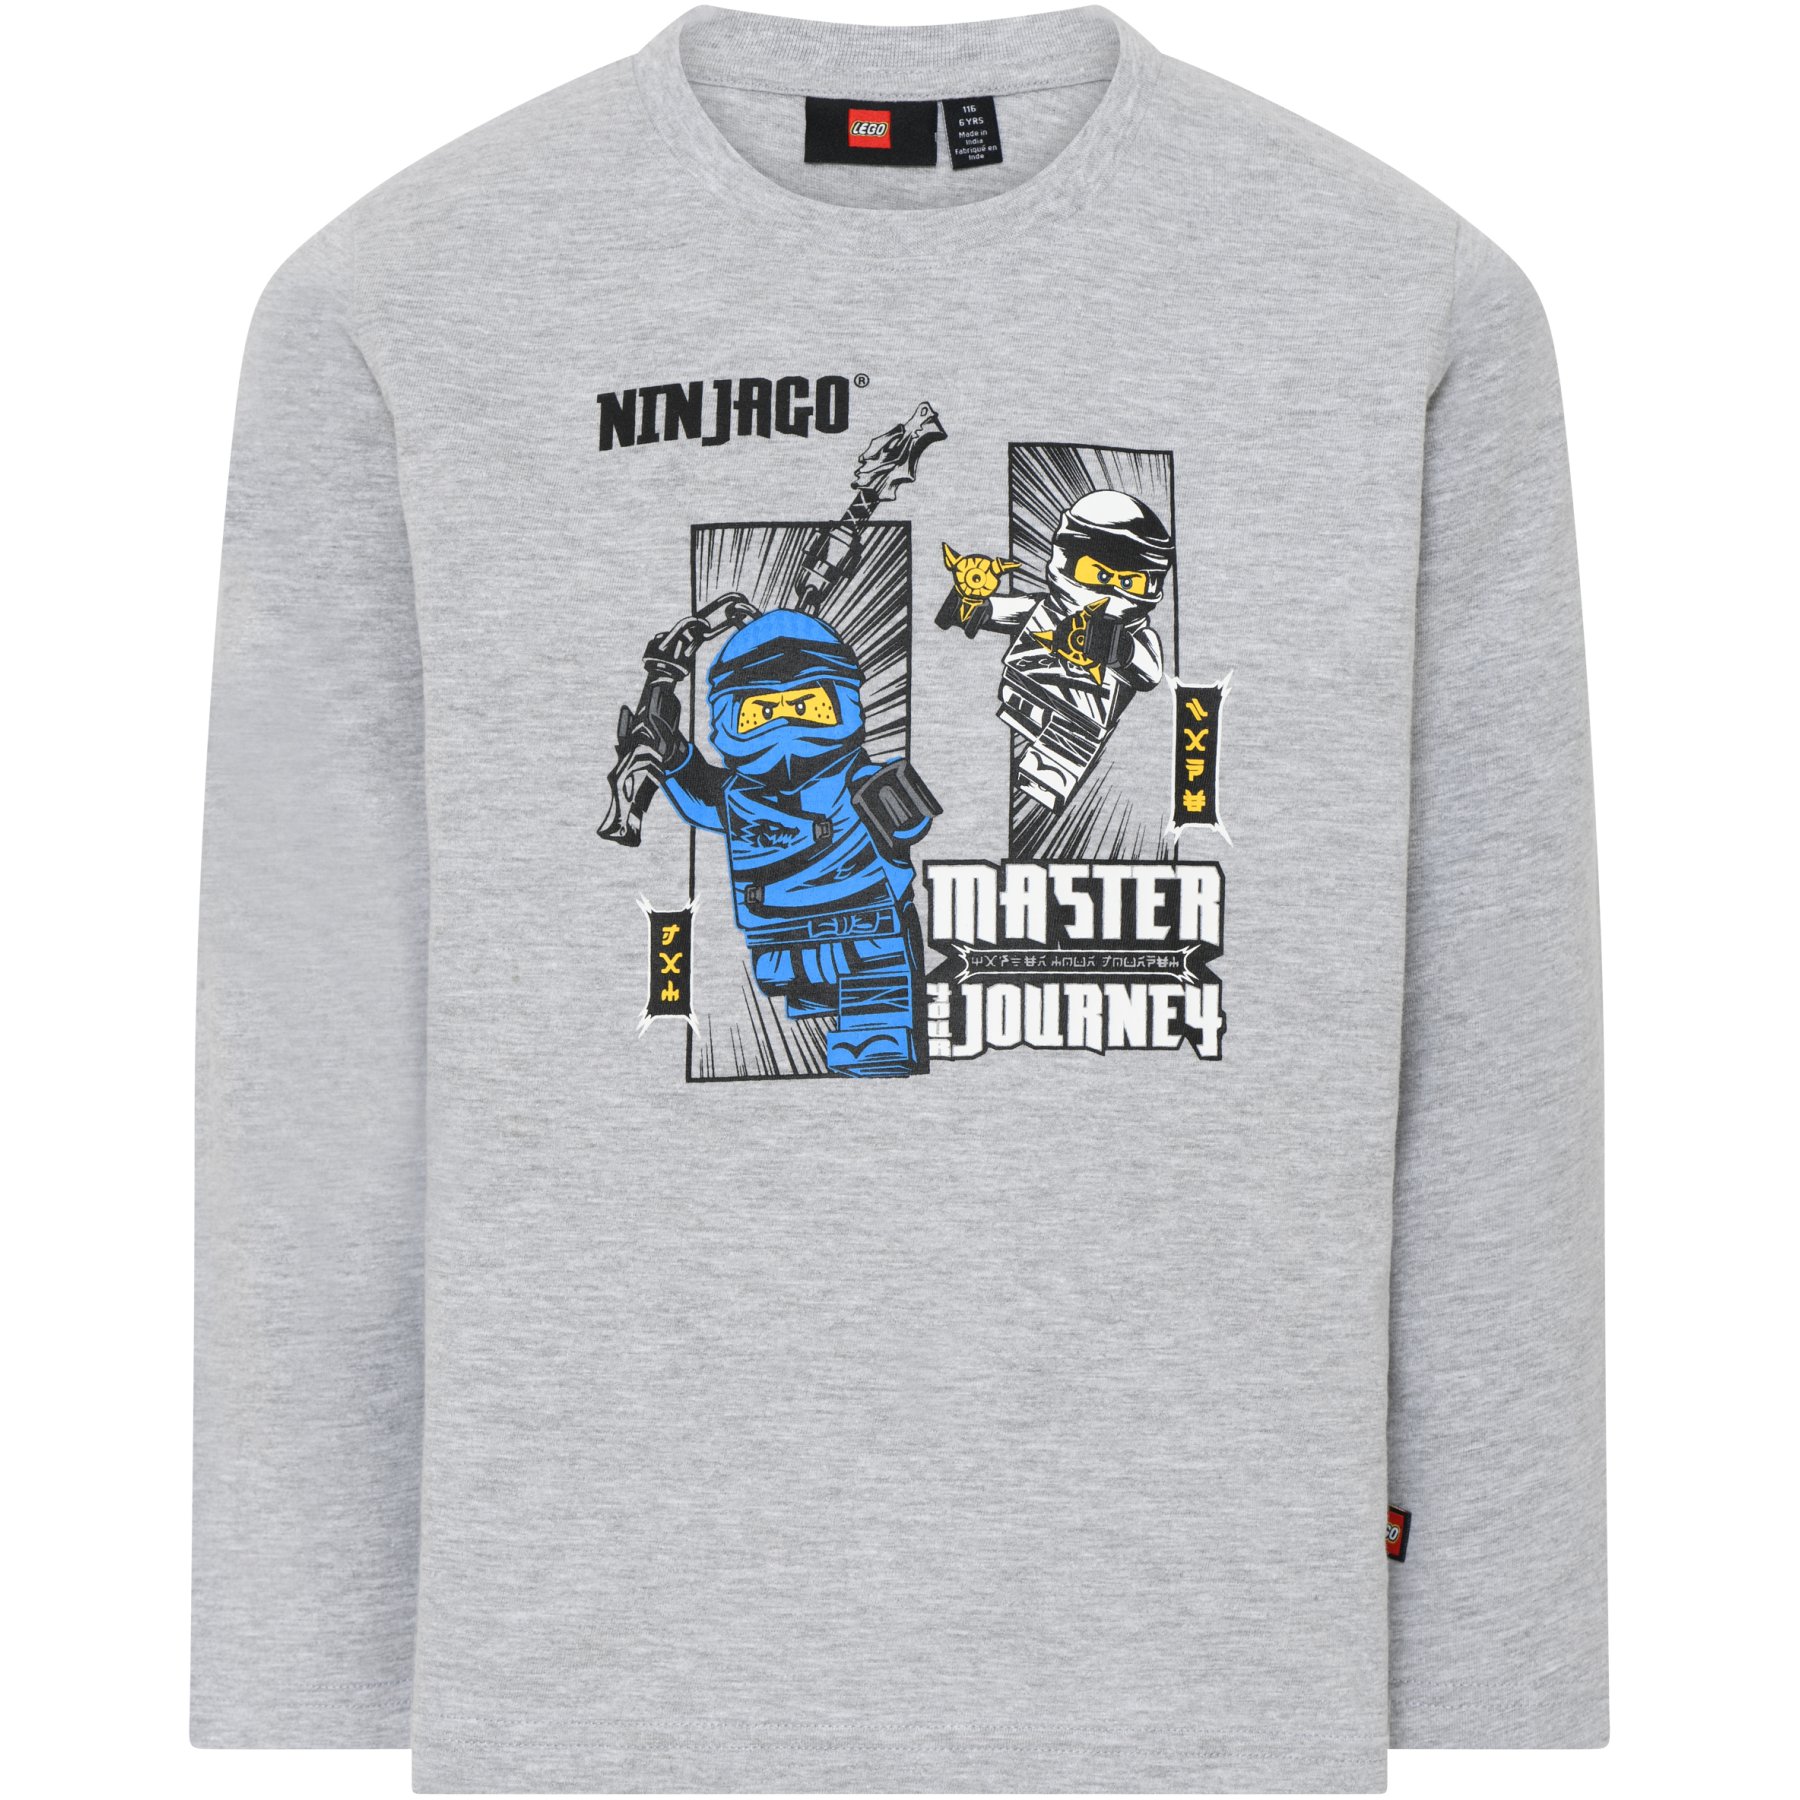 Image of LEGO® Taylor 607 - NINJAGO Boys Long Sleeve T-Shirt - Grey Melange